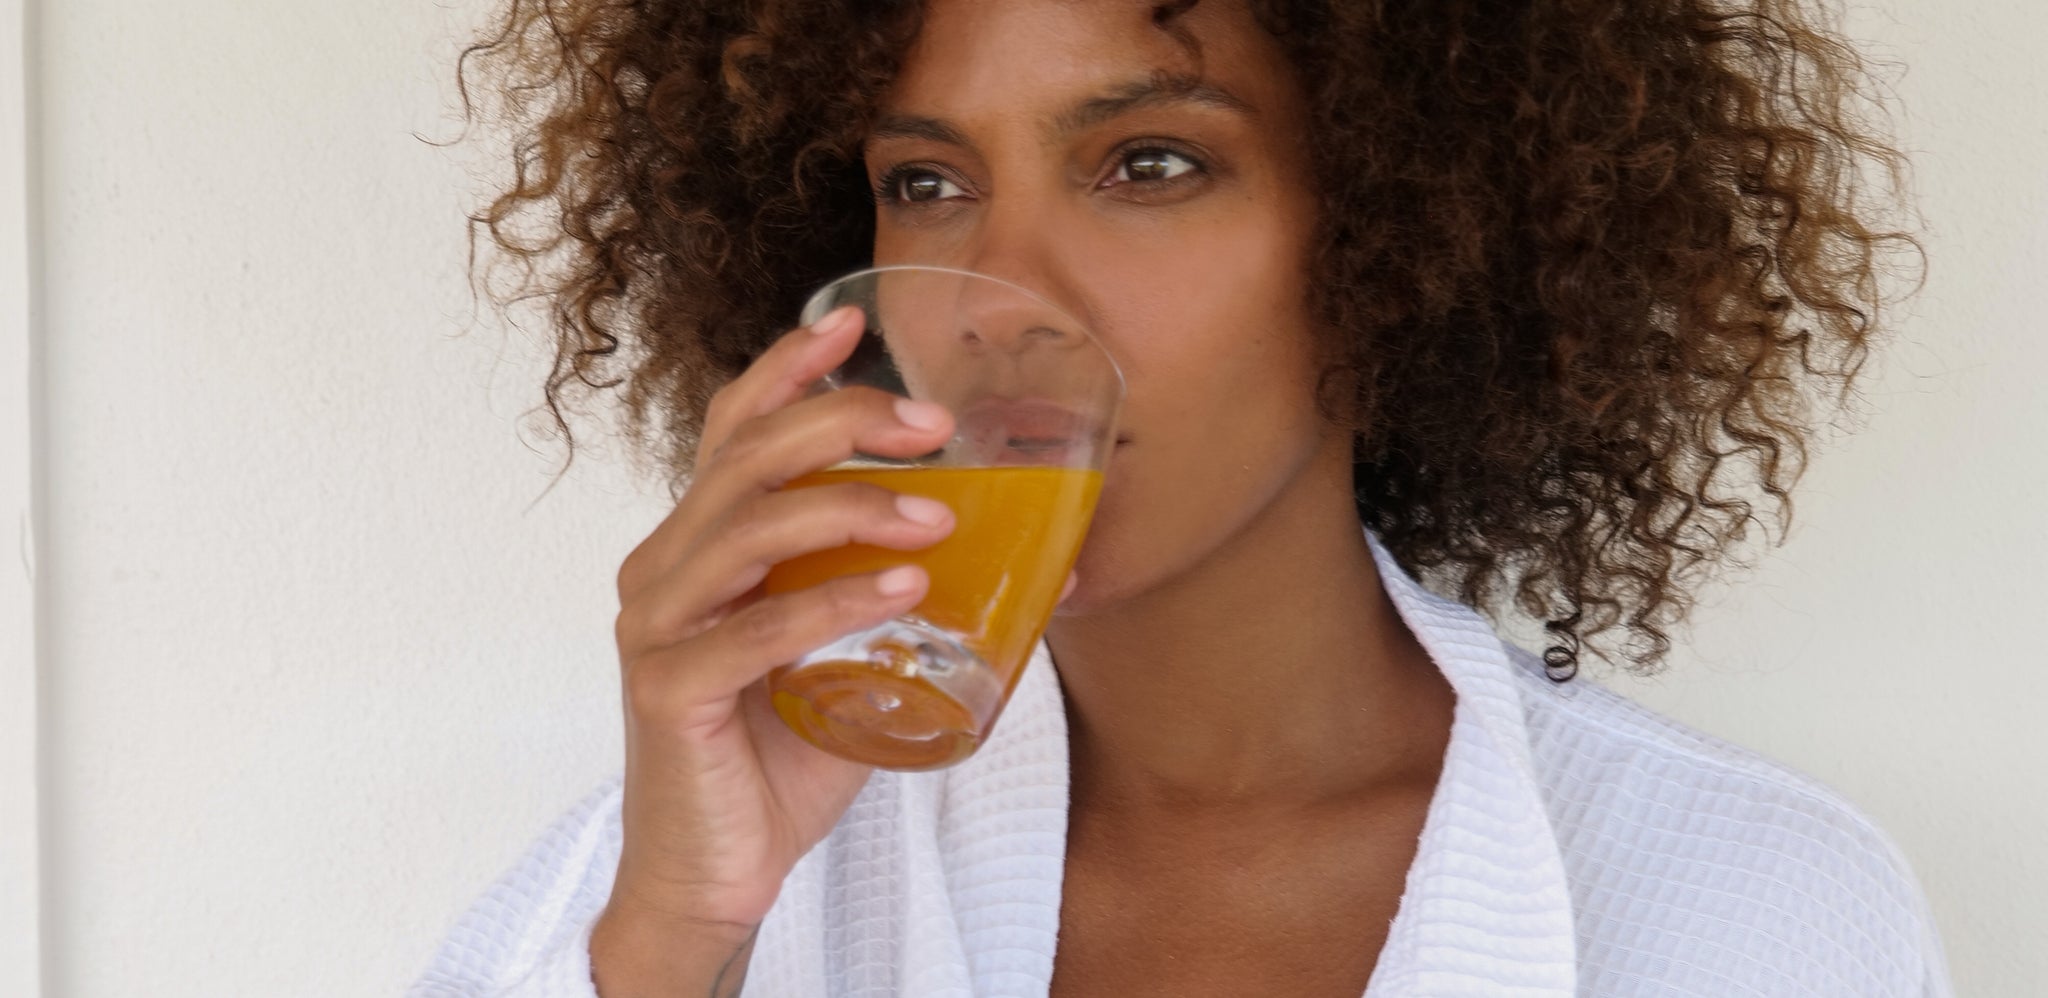 A woman drinking an orange beverage